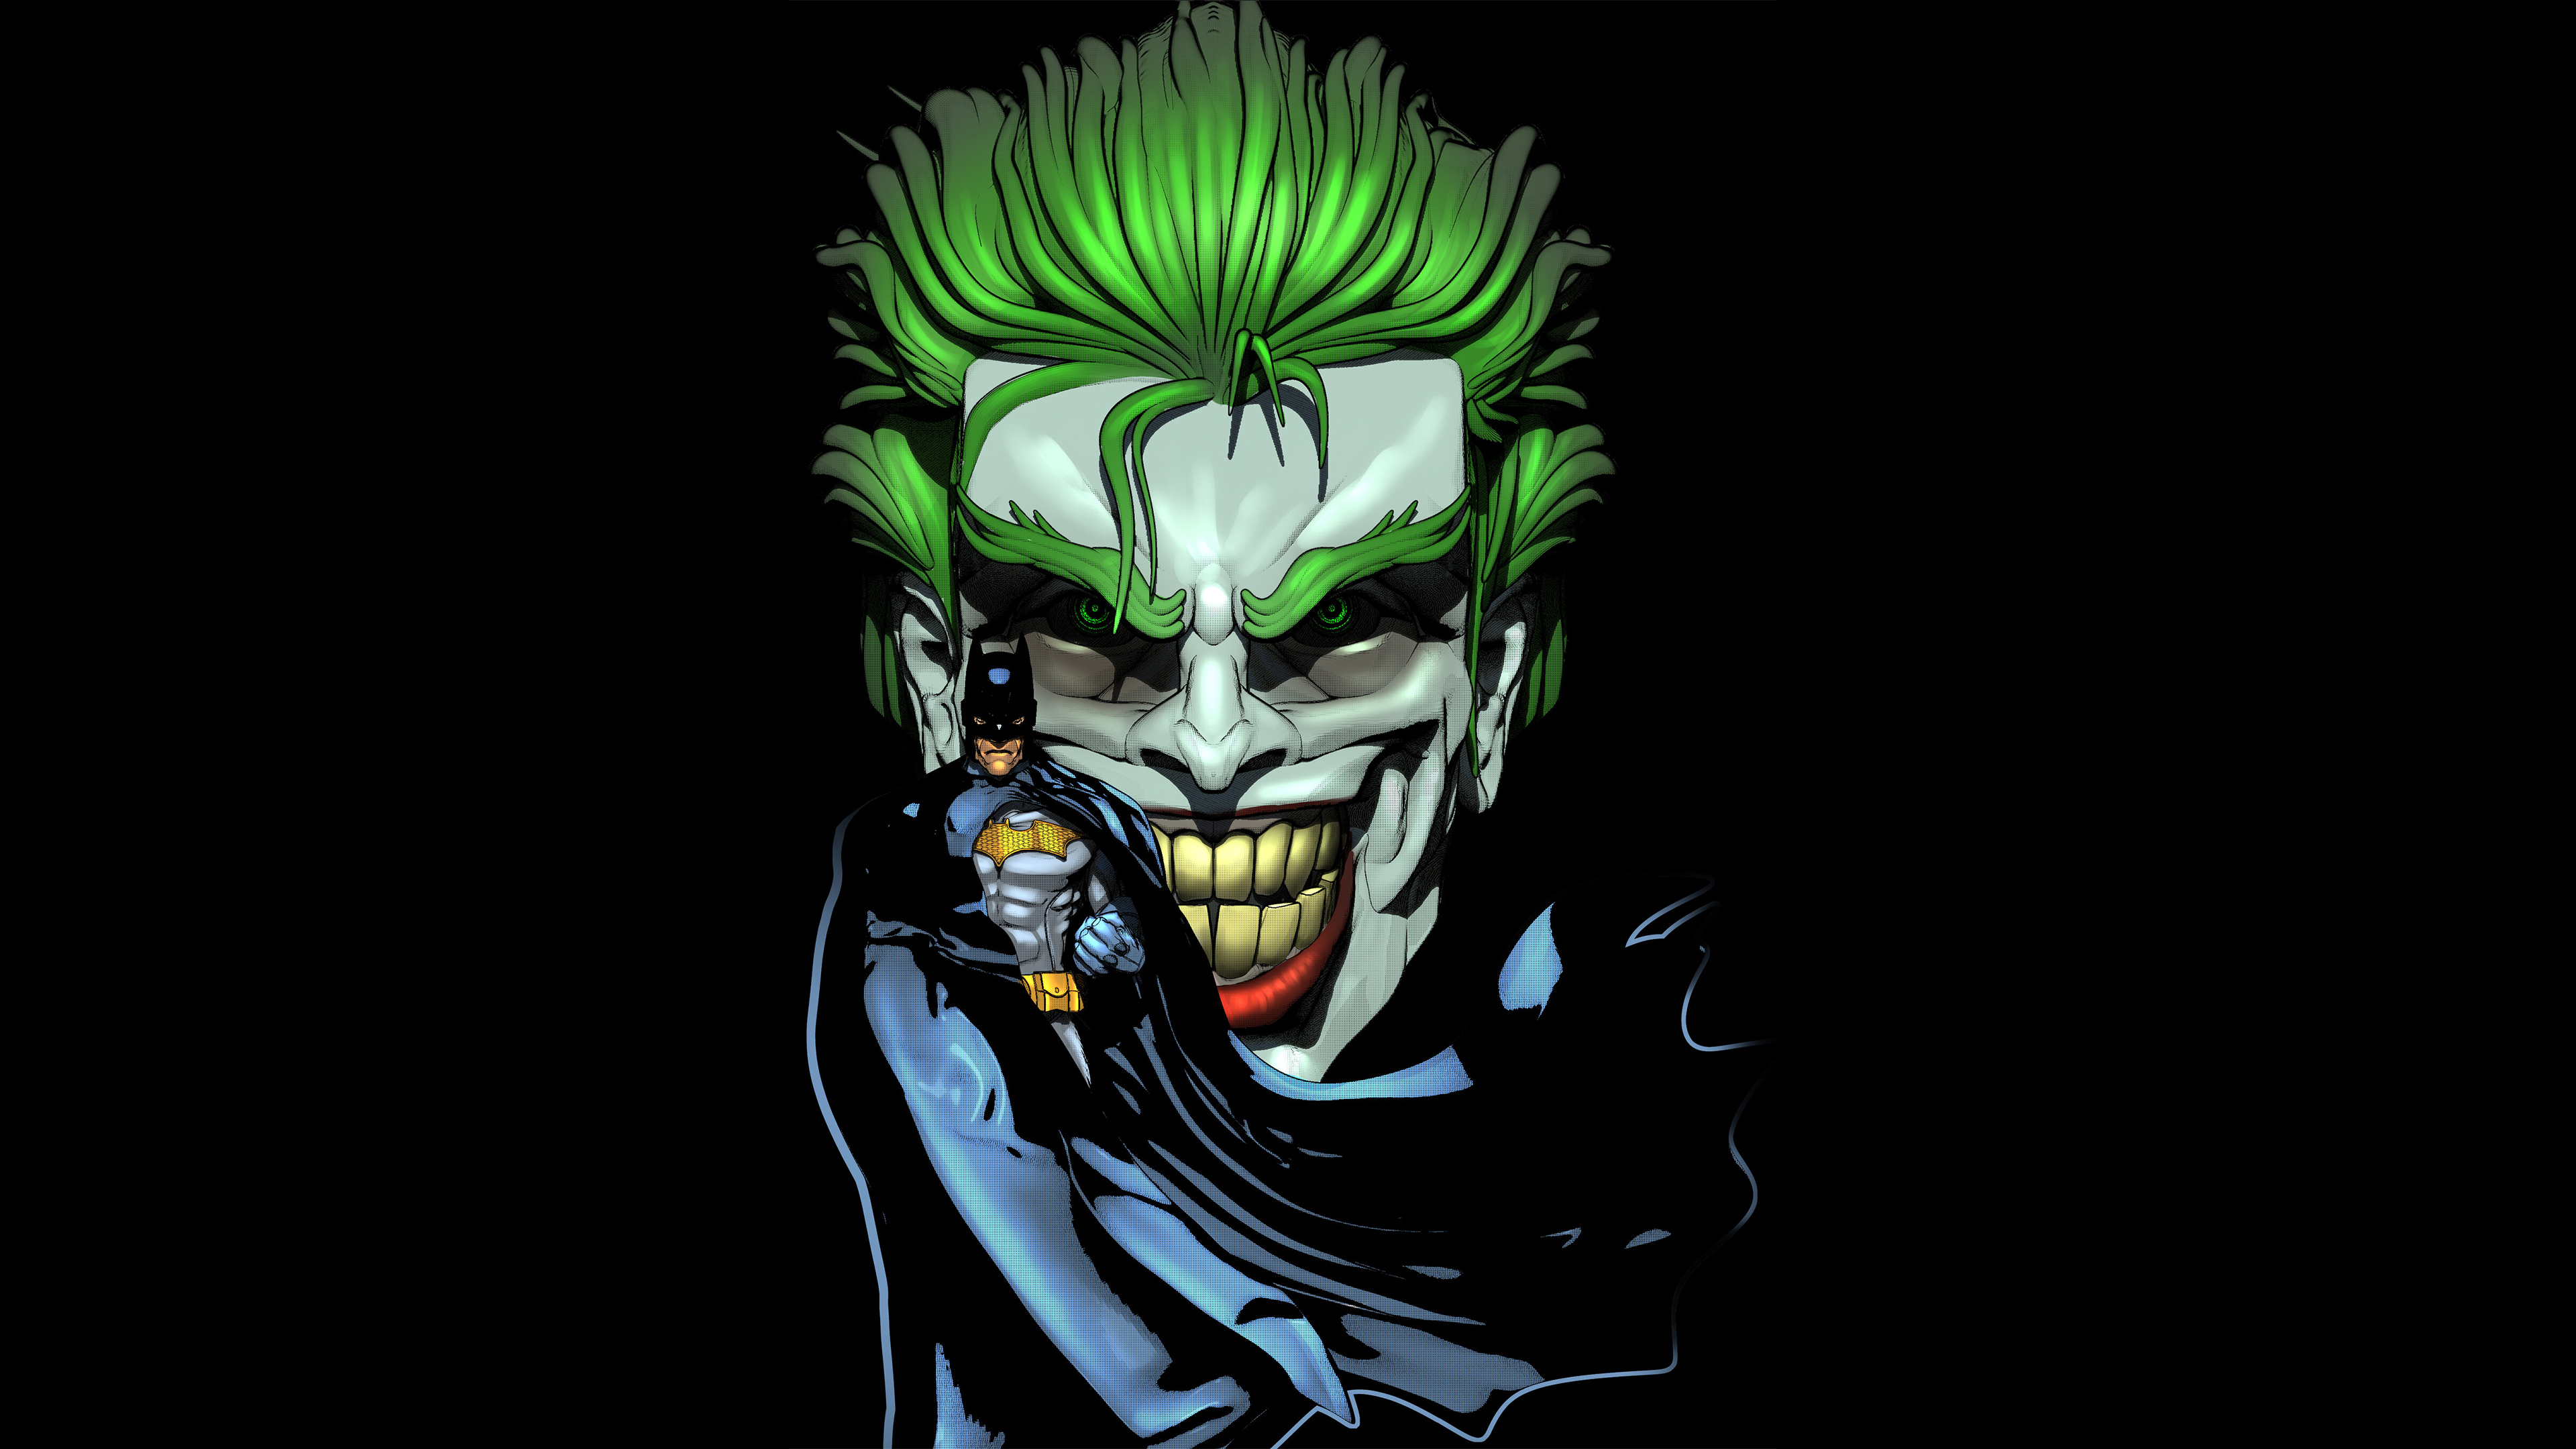 2560x1080 Joker And Batman Dc Comic 2560x1080 Resolution Wallpaper Hd Superheroes 4k Wallpapers Images Photos And Background Wallpapers Den